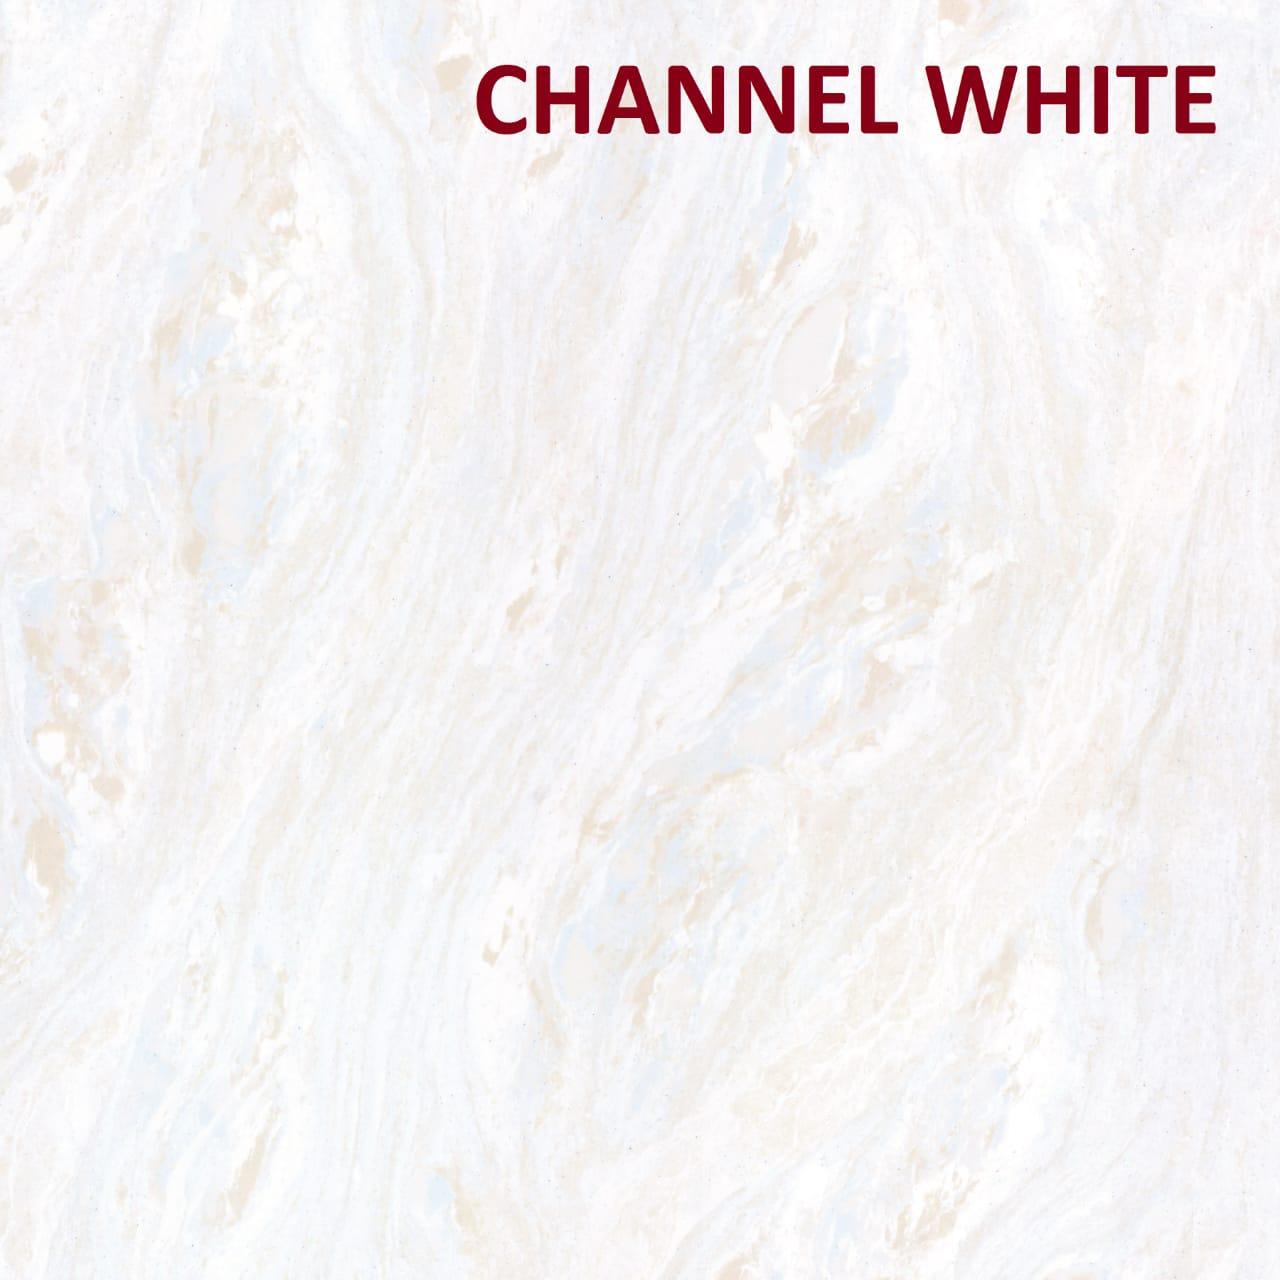 Channel White